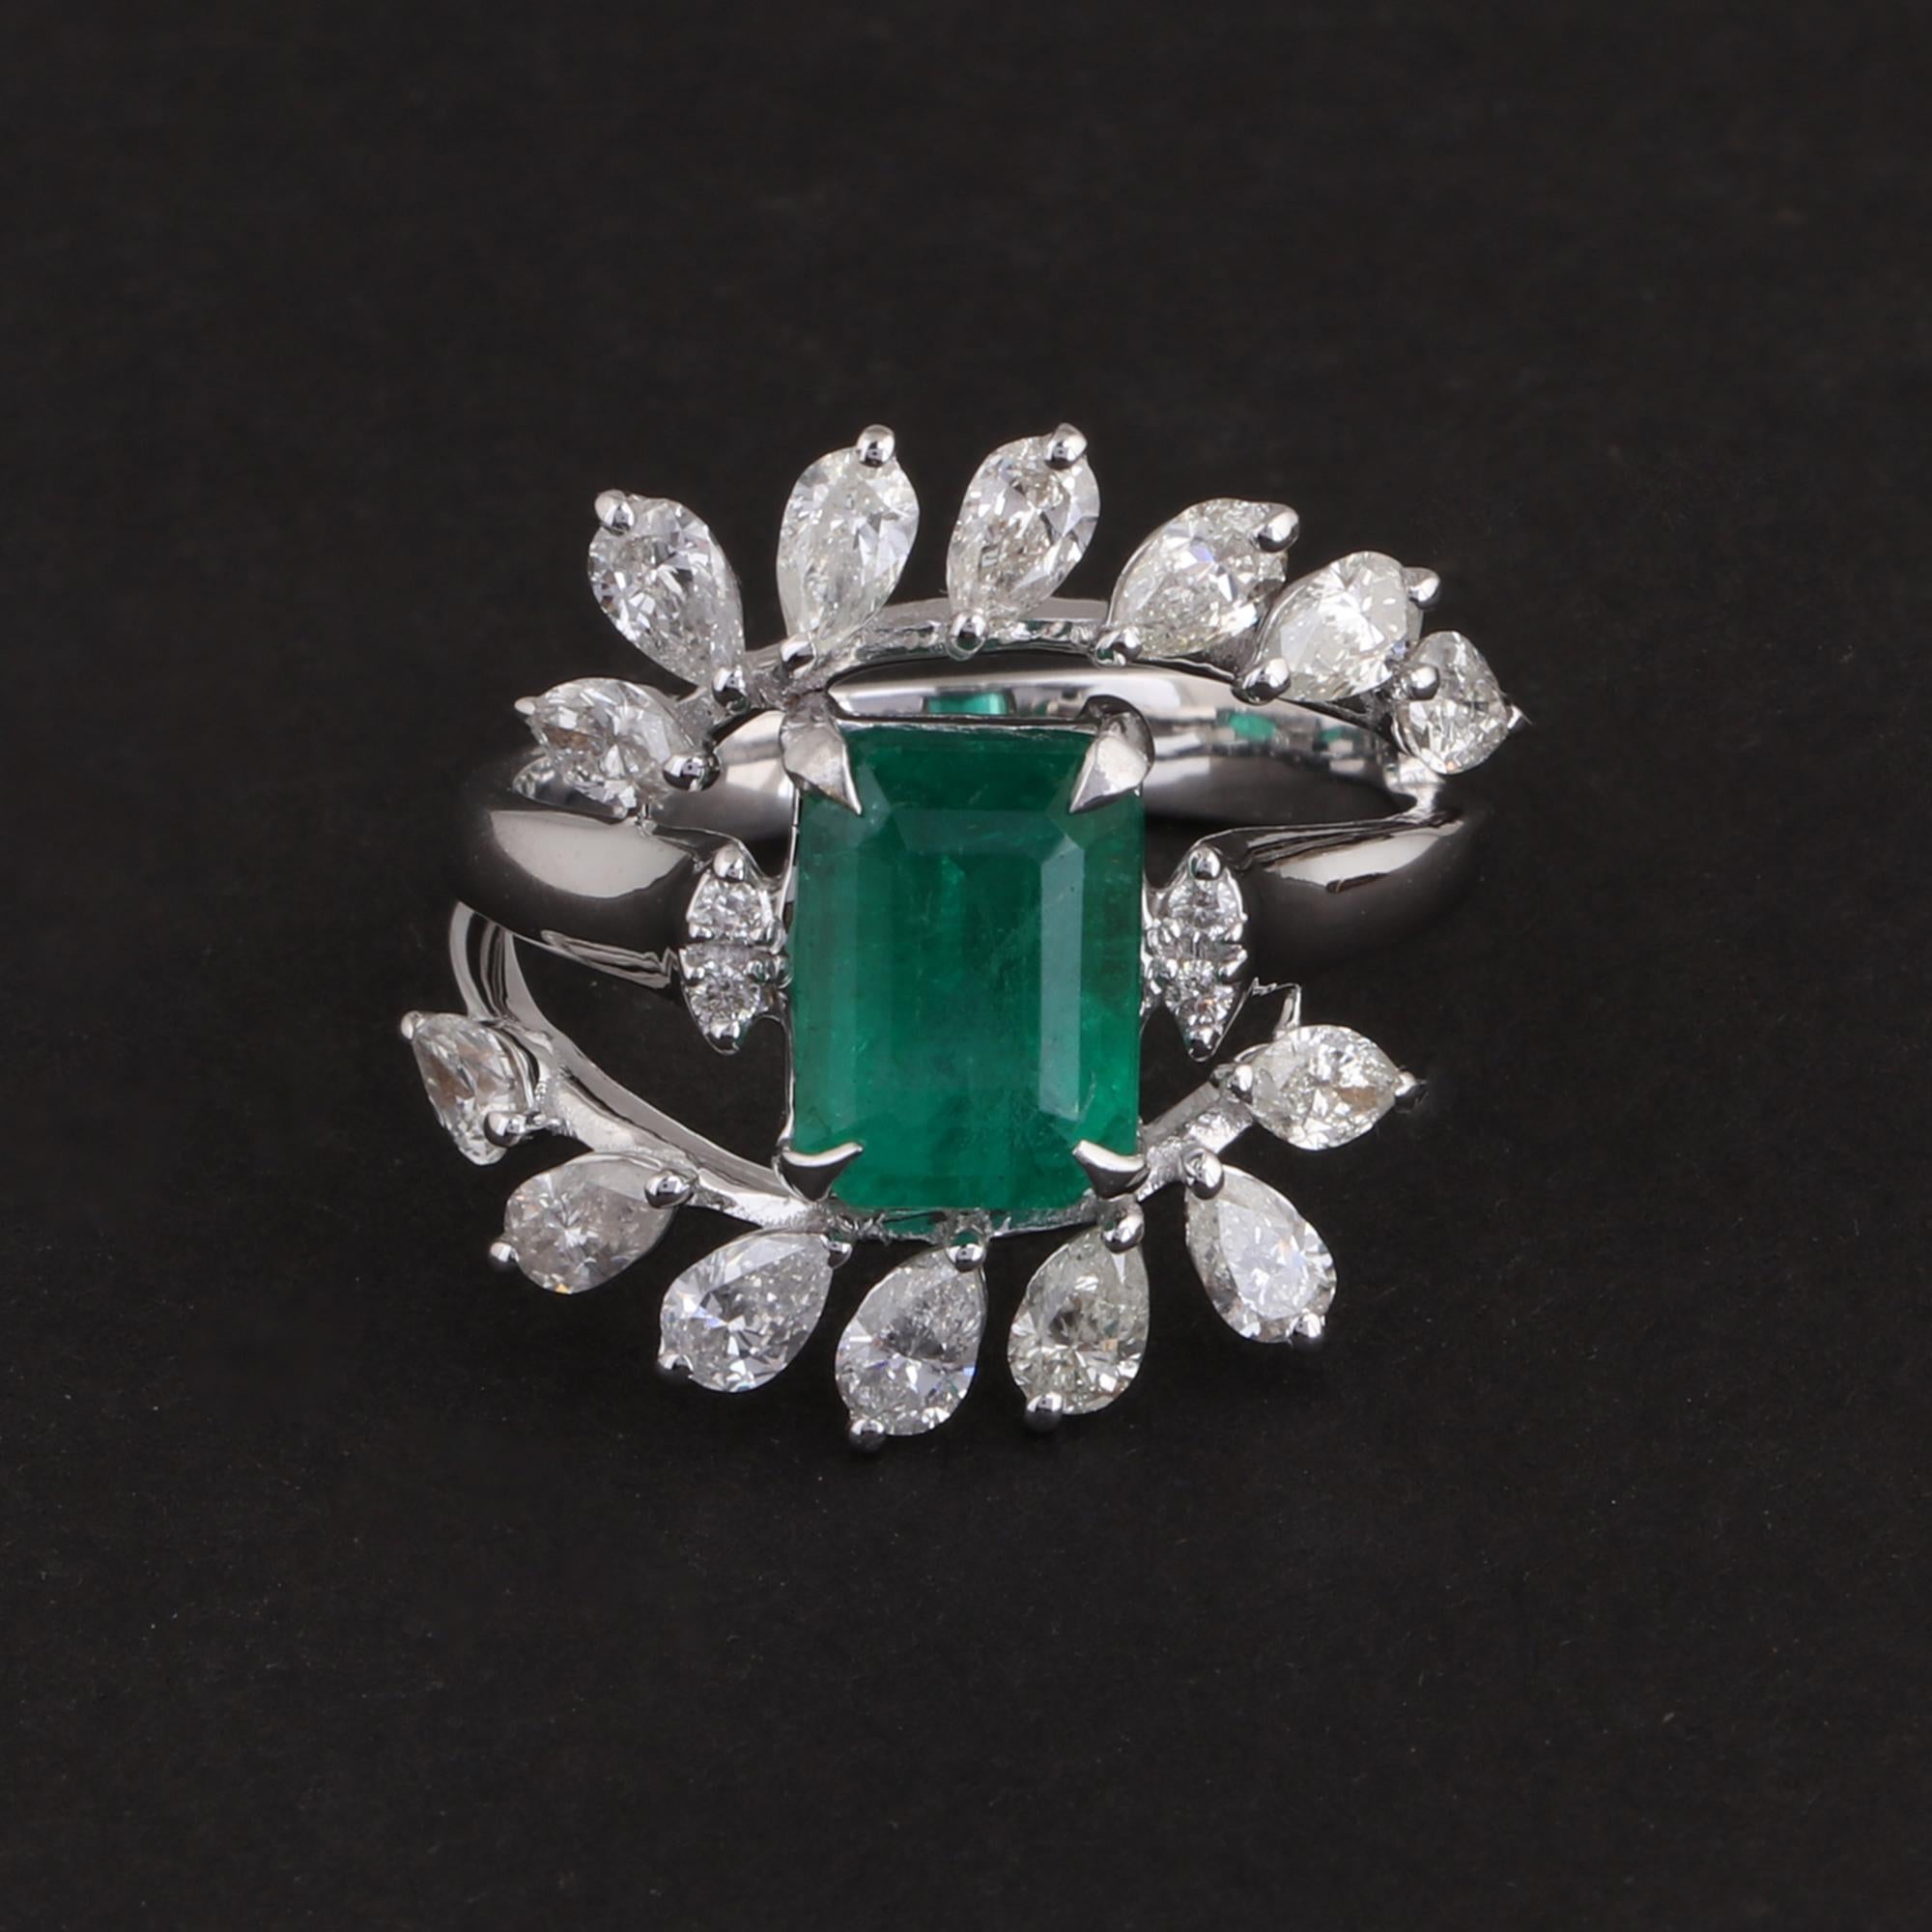 Emerald Cut Zambian Emerald Gemstone Ring Pear Diamond 18 Karat White Gold Handmade Jewelry For Sale